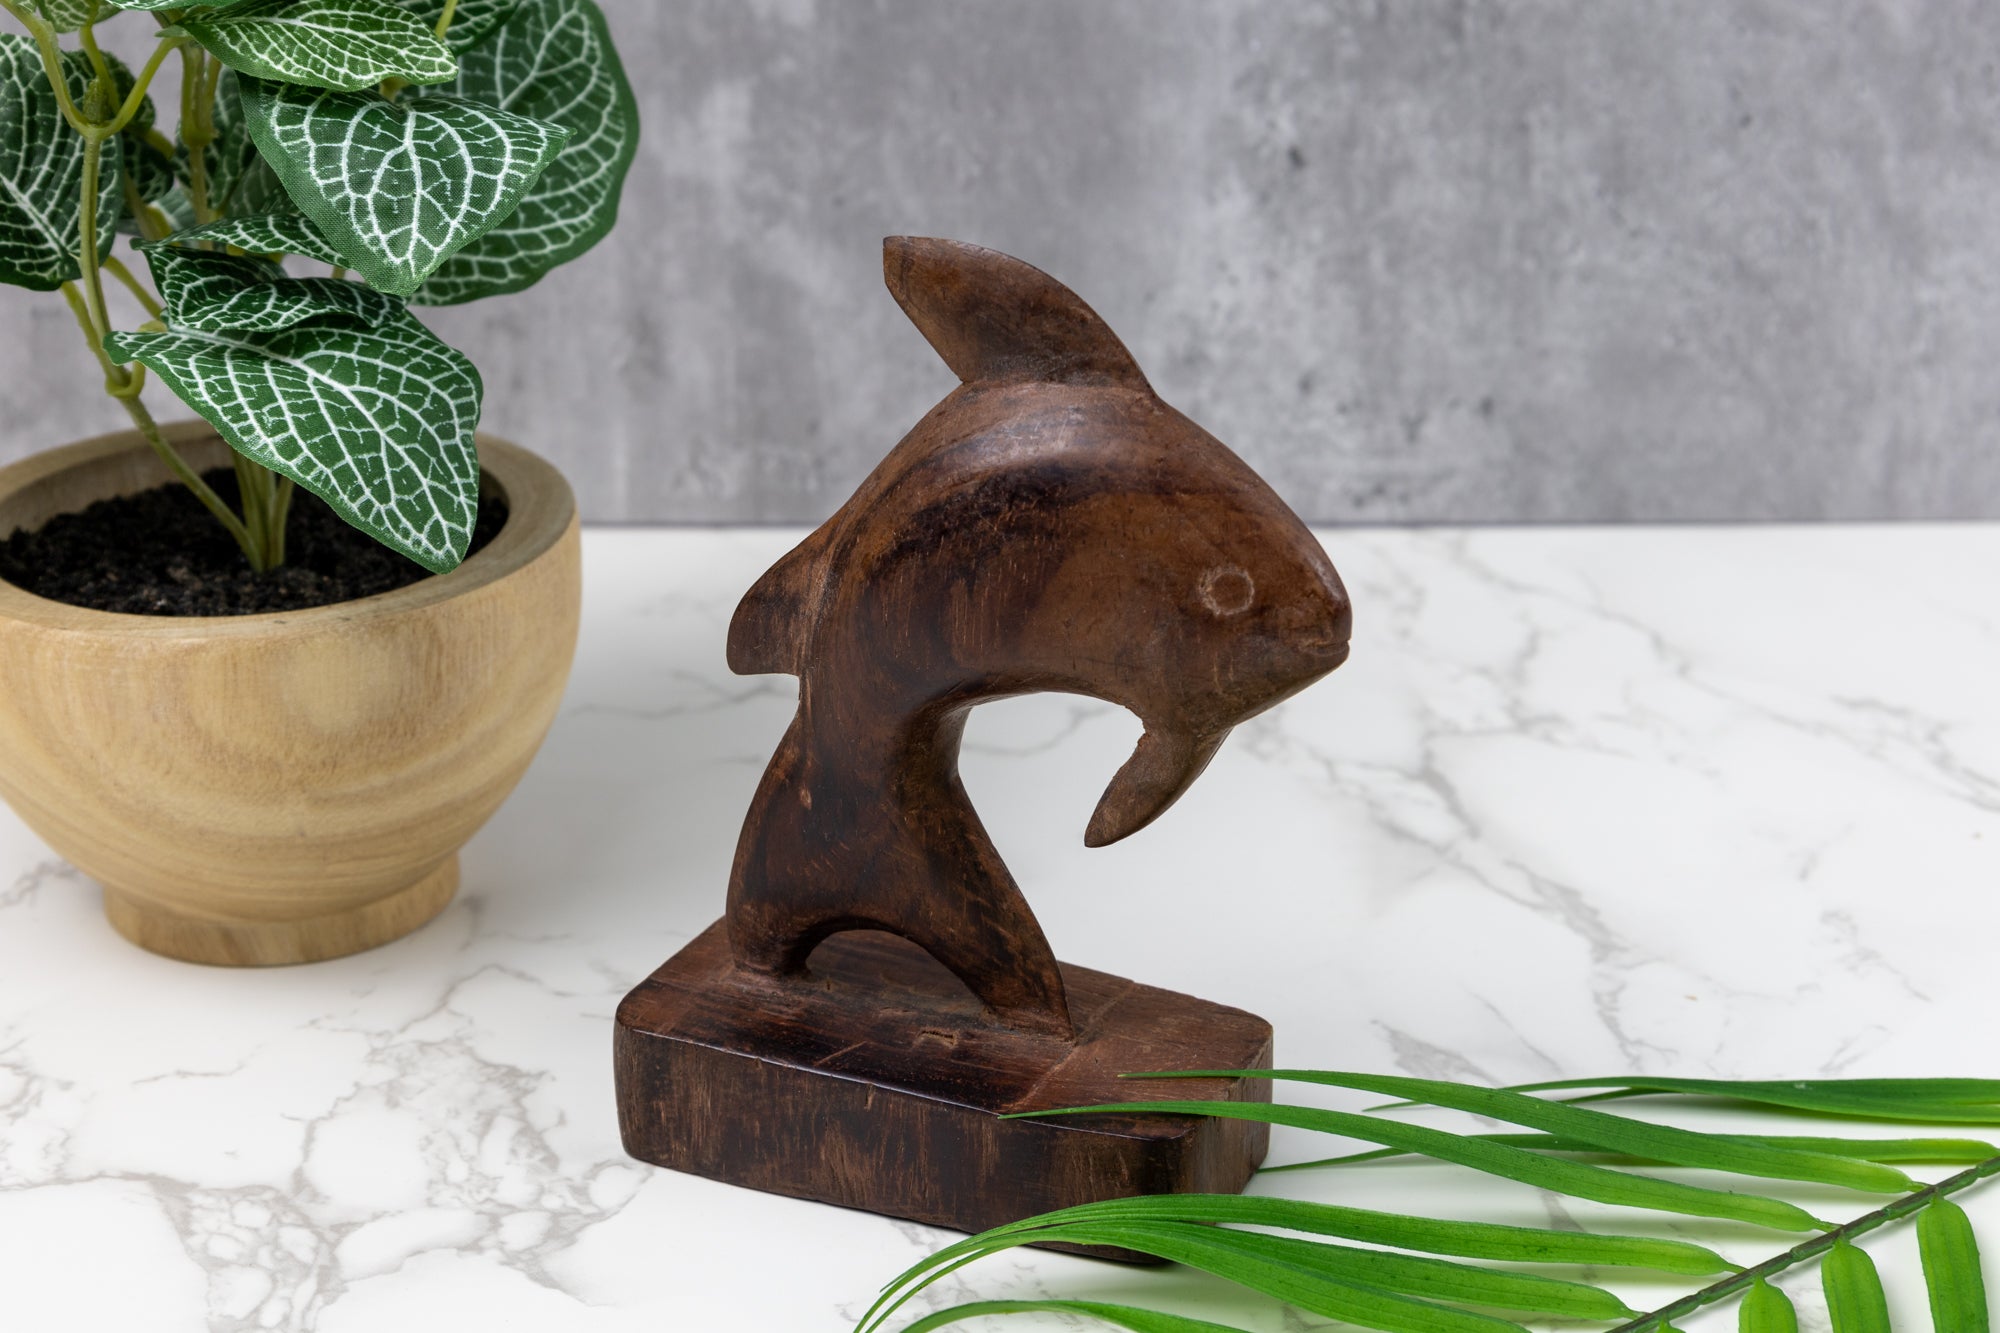 Fish Figurine, Wood Carving